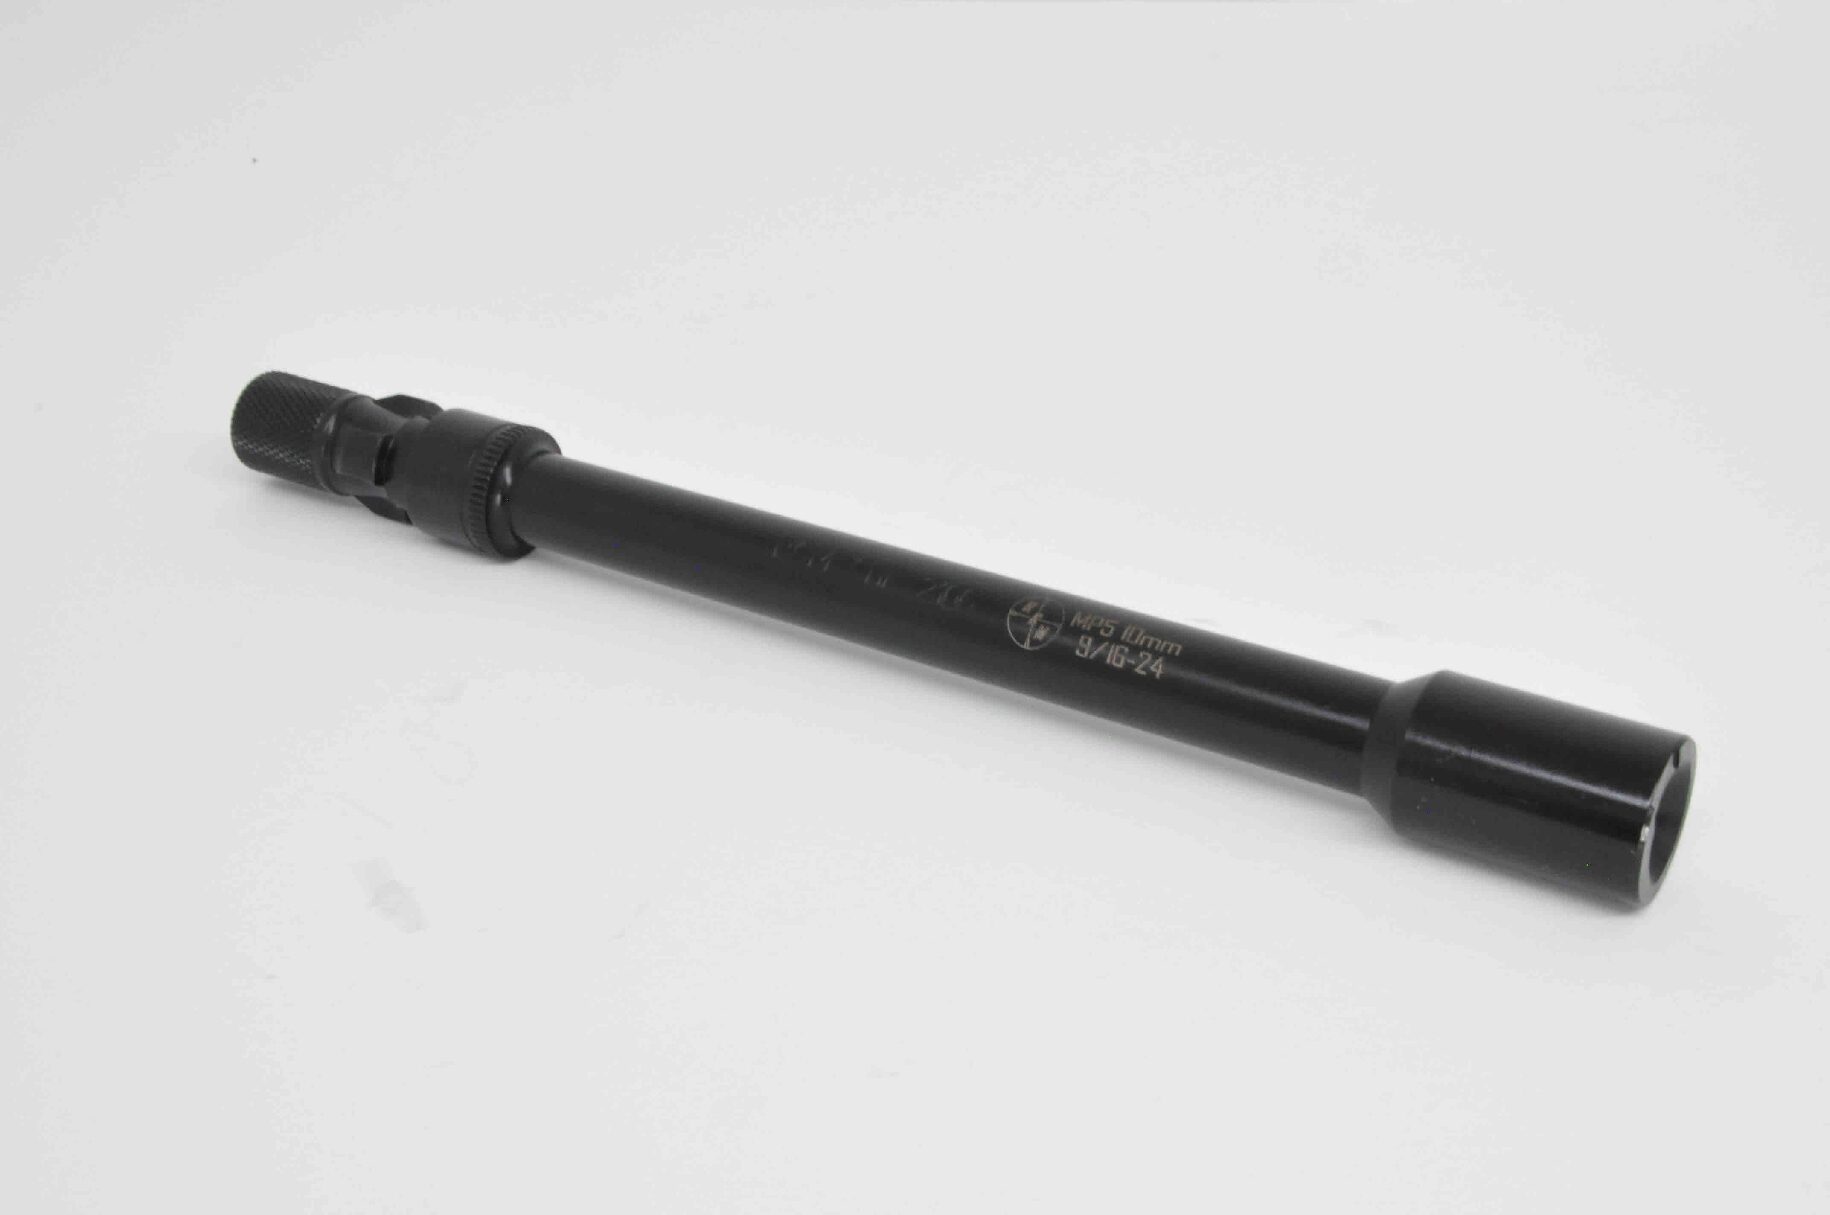 RCM HK STYLE MP5 10mm, 9/16-24 THREAD